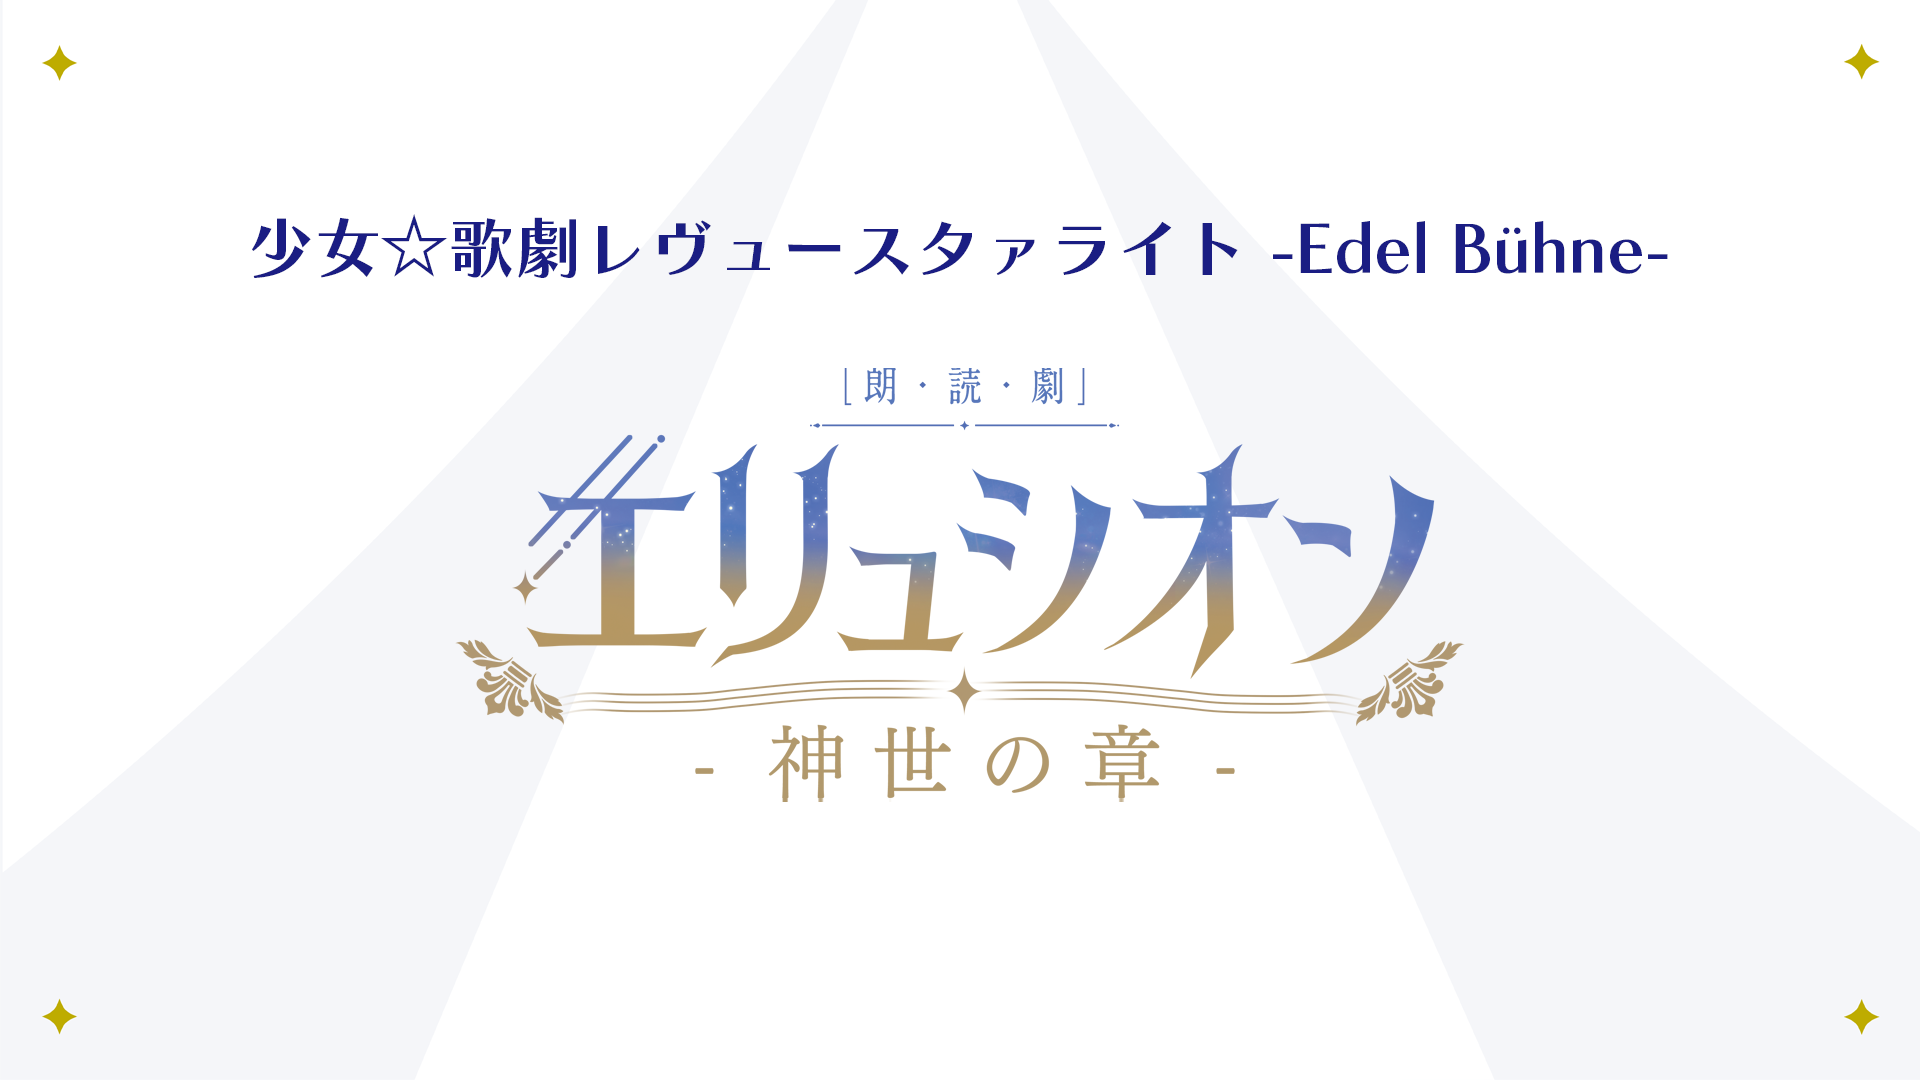 [Streaming+] Revue Starlight -Edel Bühne- ～Reading Drama “Elysium Kamiyo no sho”～